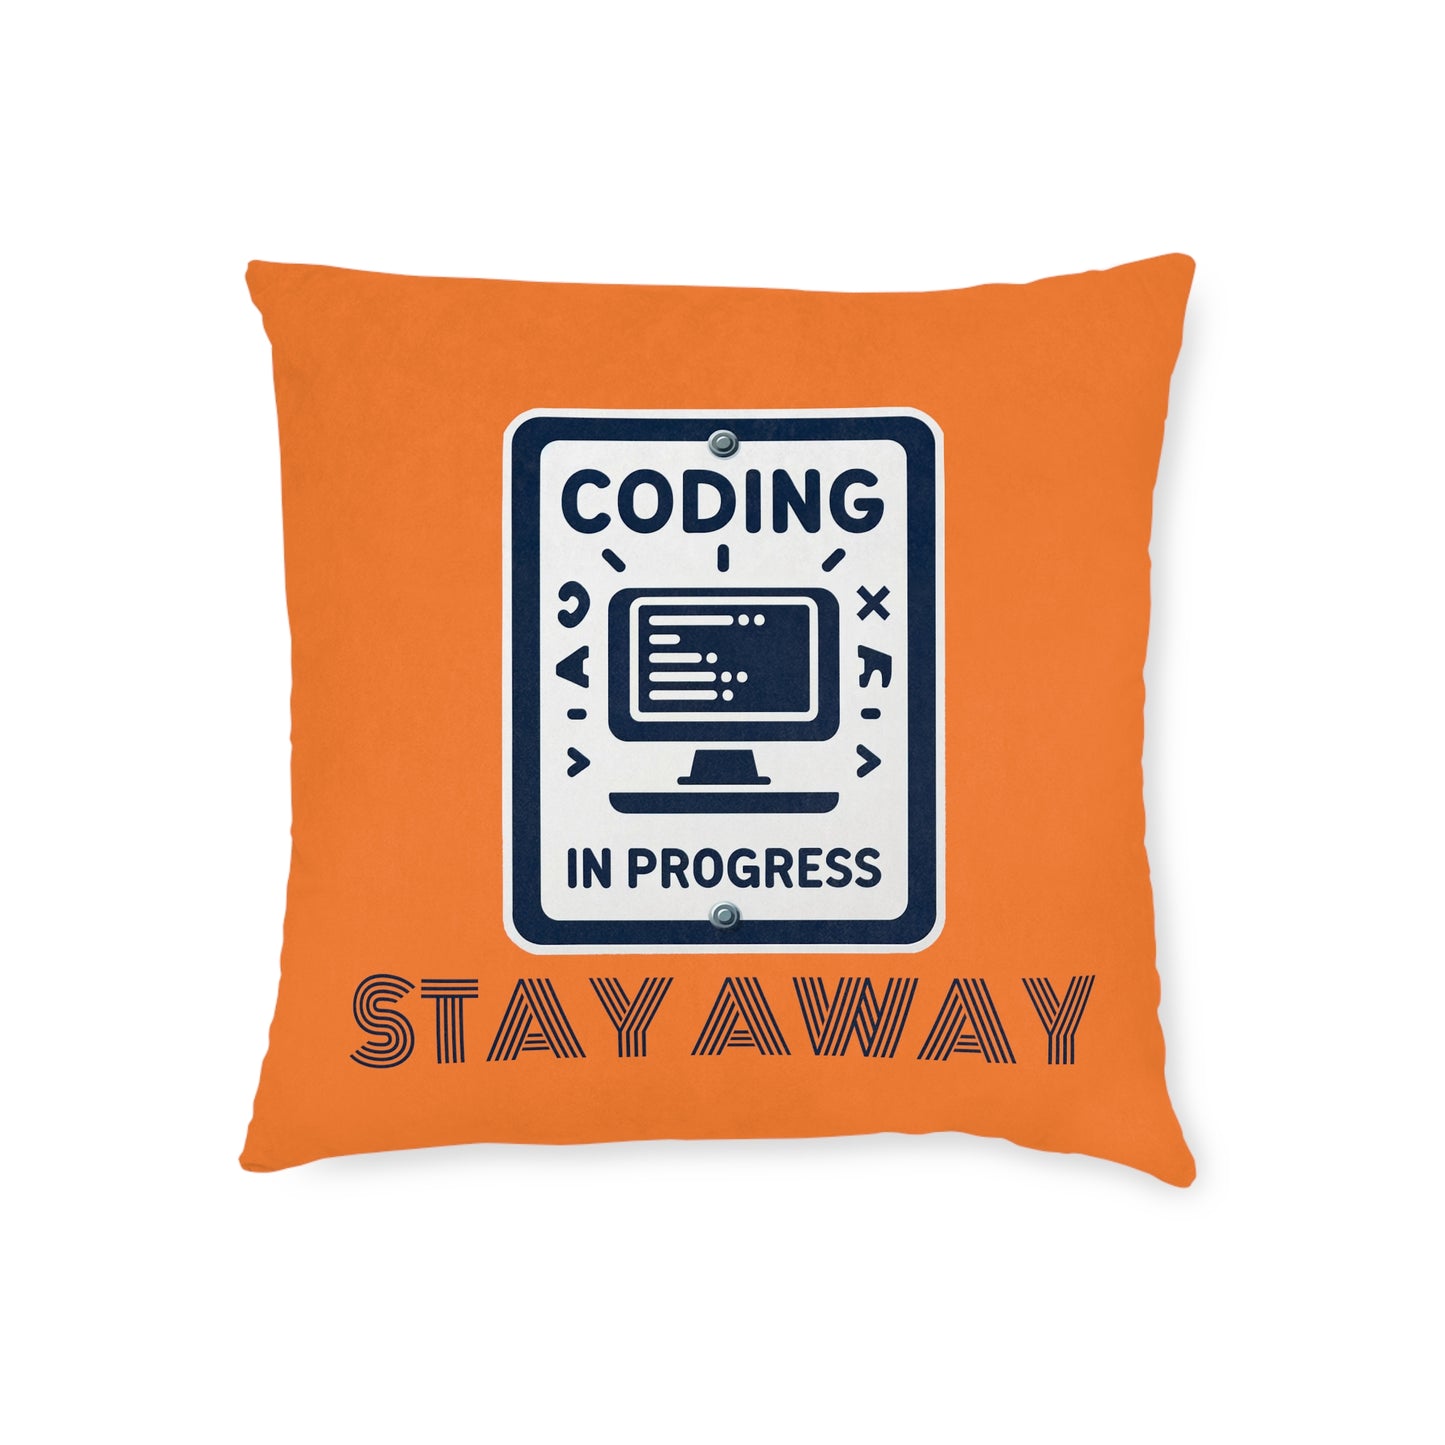 Coding In Progress Stay Away (Orange) - Square Pillow